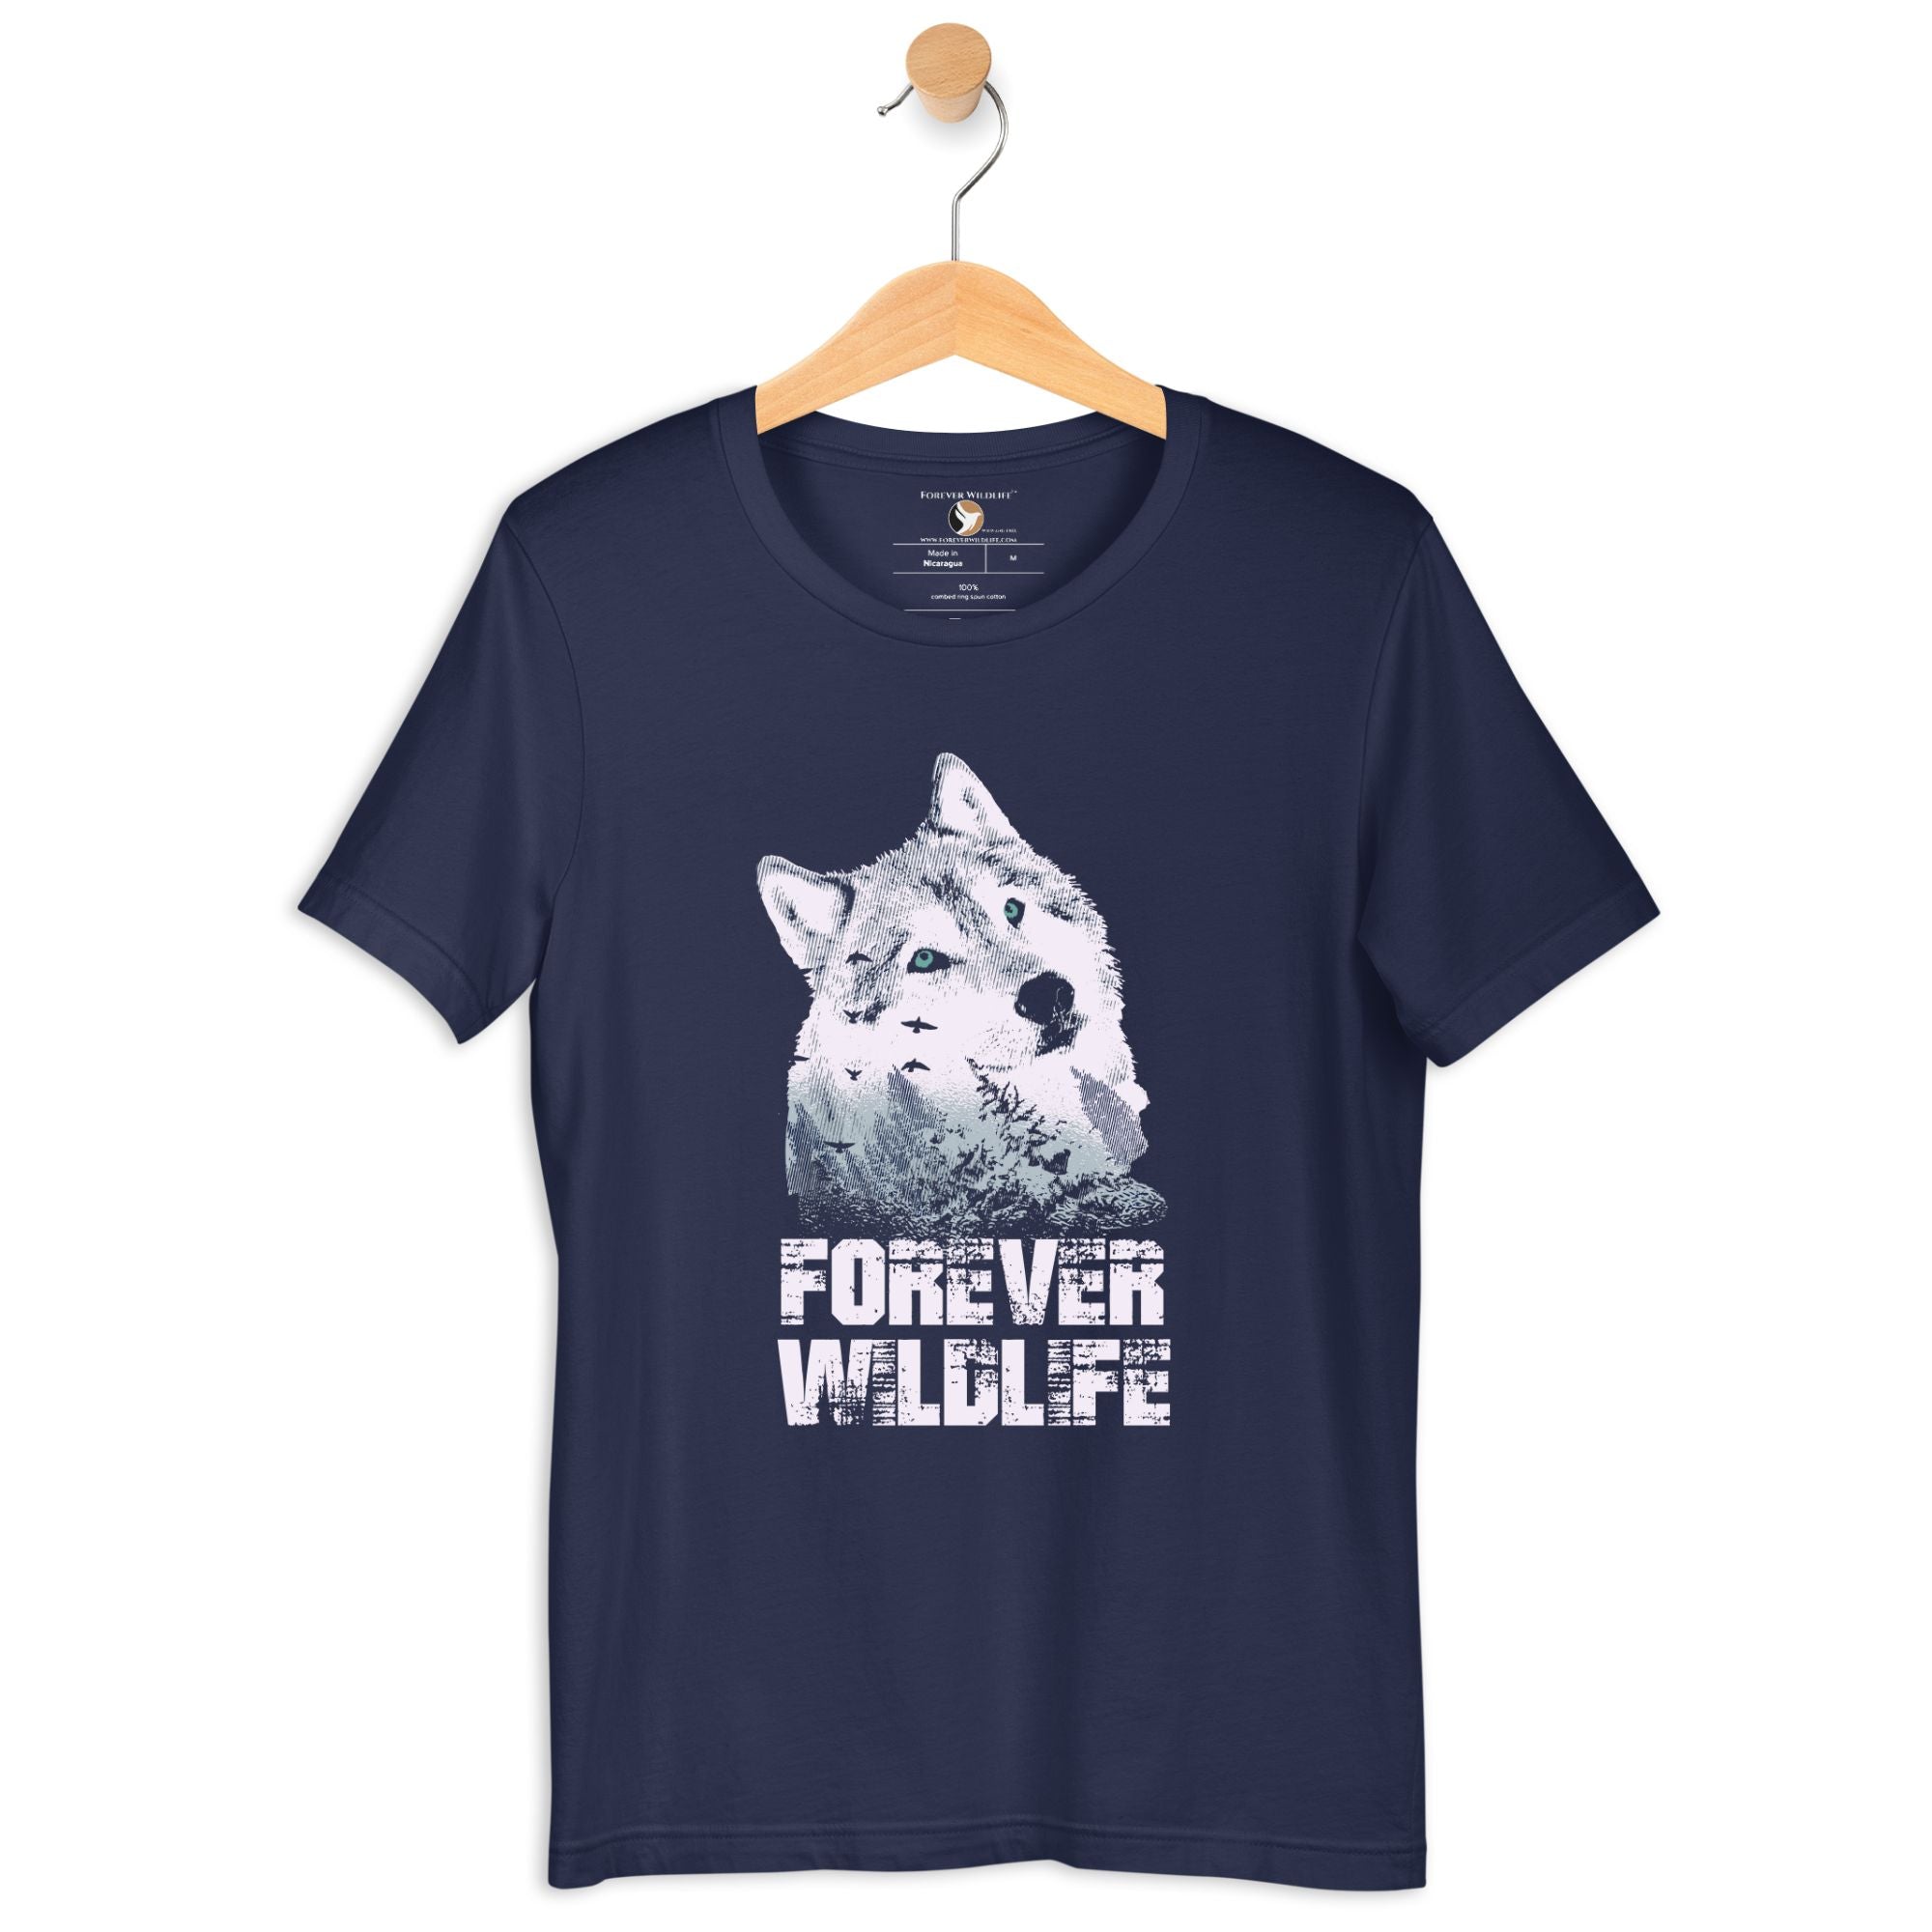 Wolf T-Shirt in Navy – Premium Wildlife T-Shirt Design, Wildlife Clothing & Apparel from Forever Wildlife